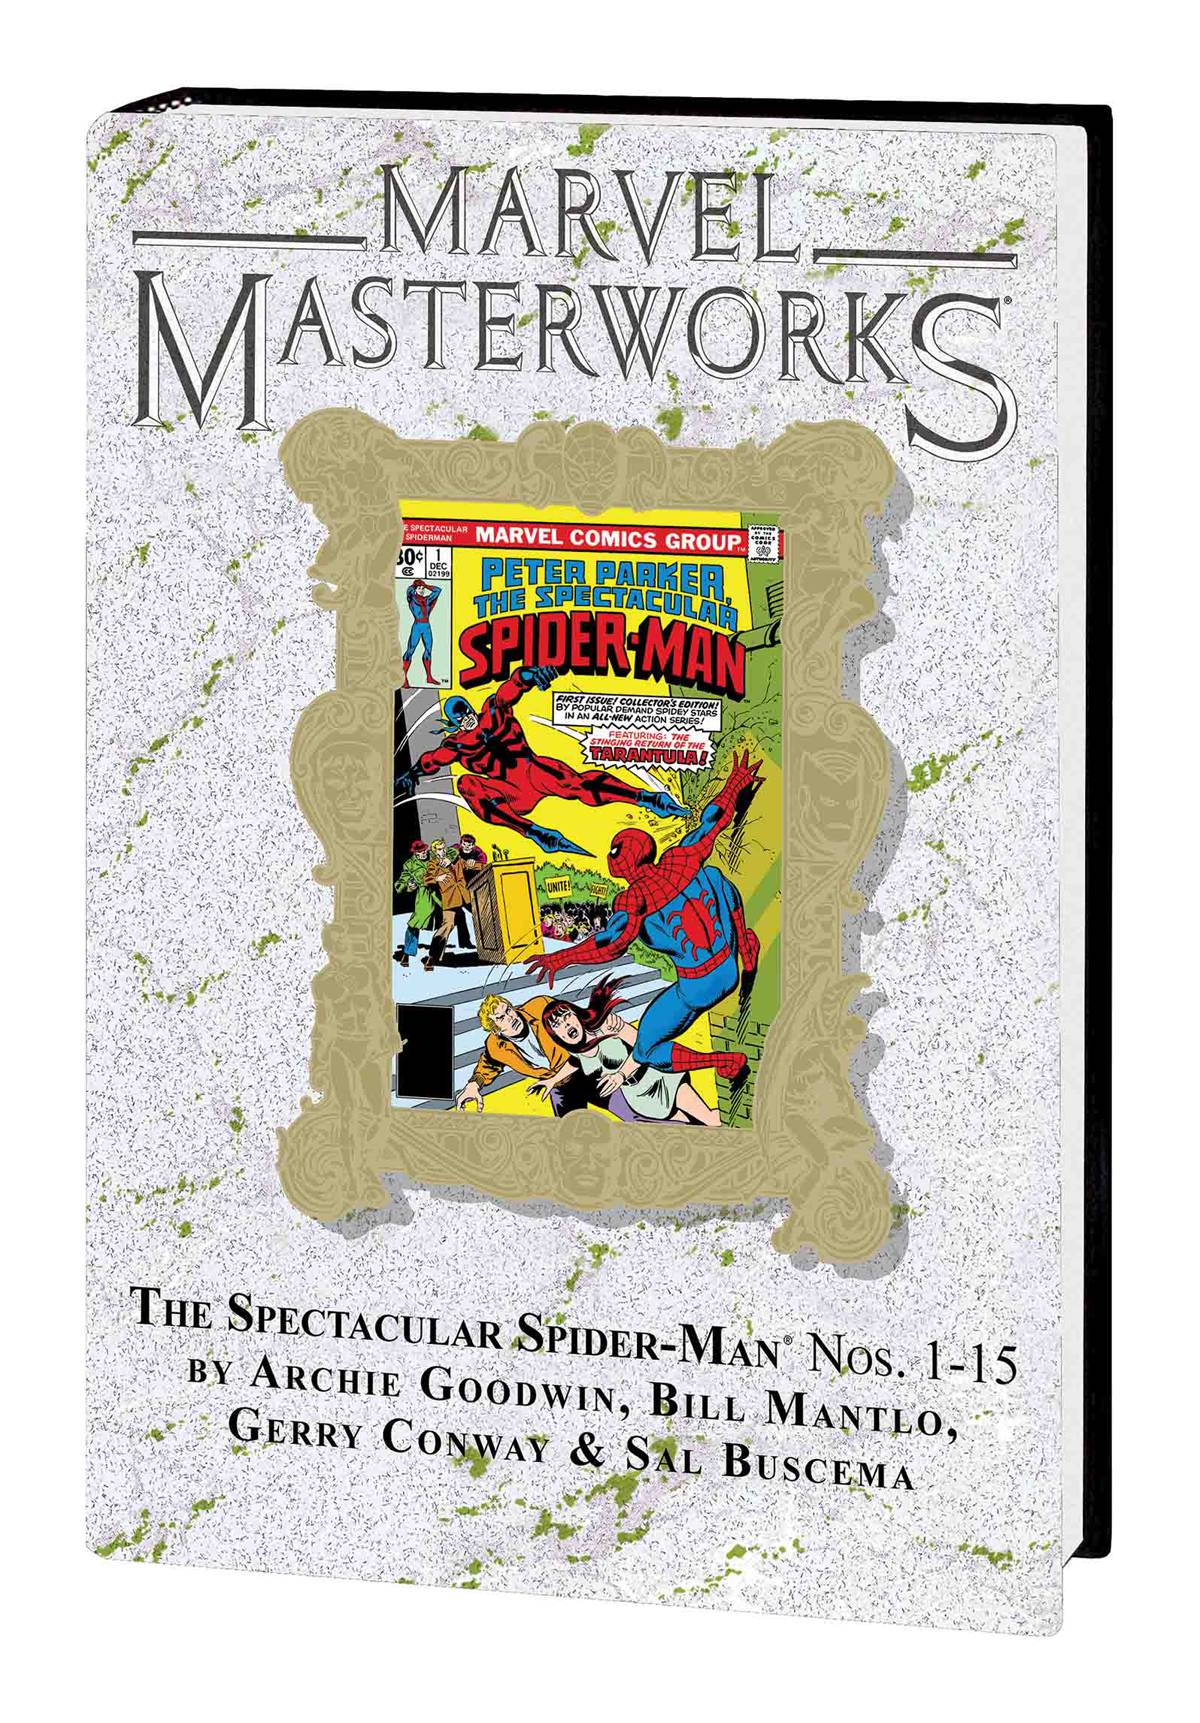 Marvel Masterworks Spectacular Spider-Man Hardcover Volume 1 Direct Market Edition Edition 250